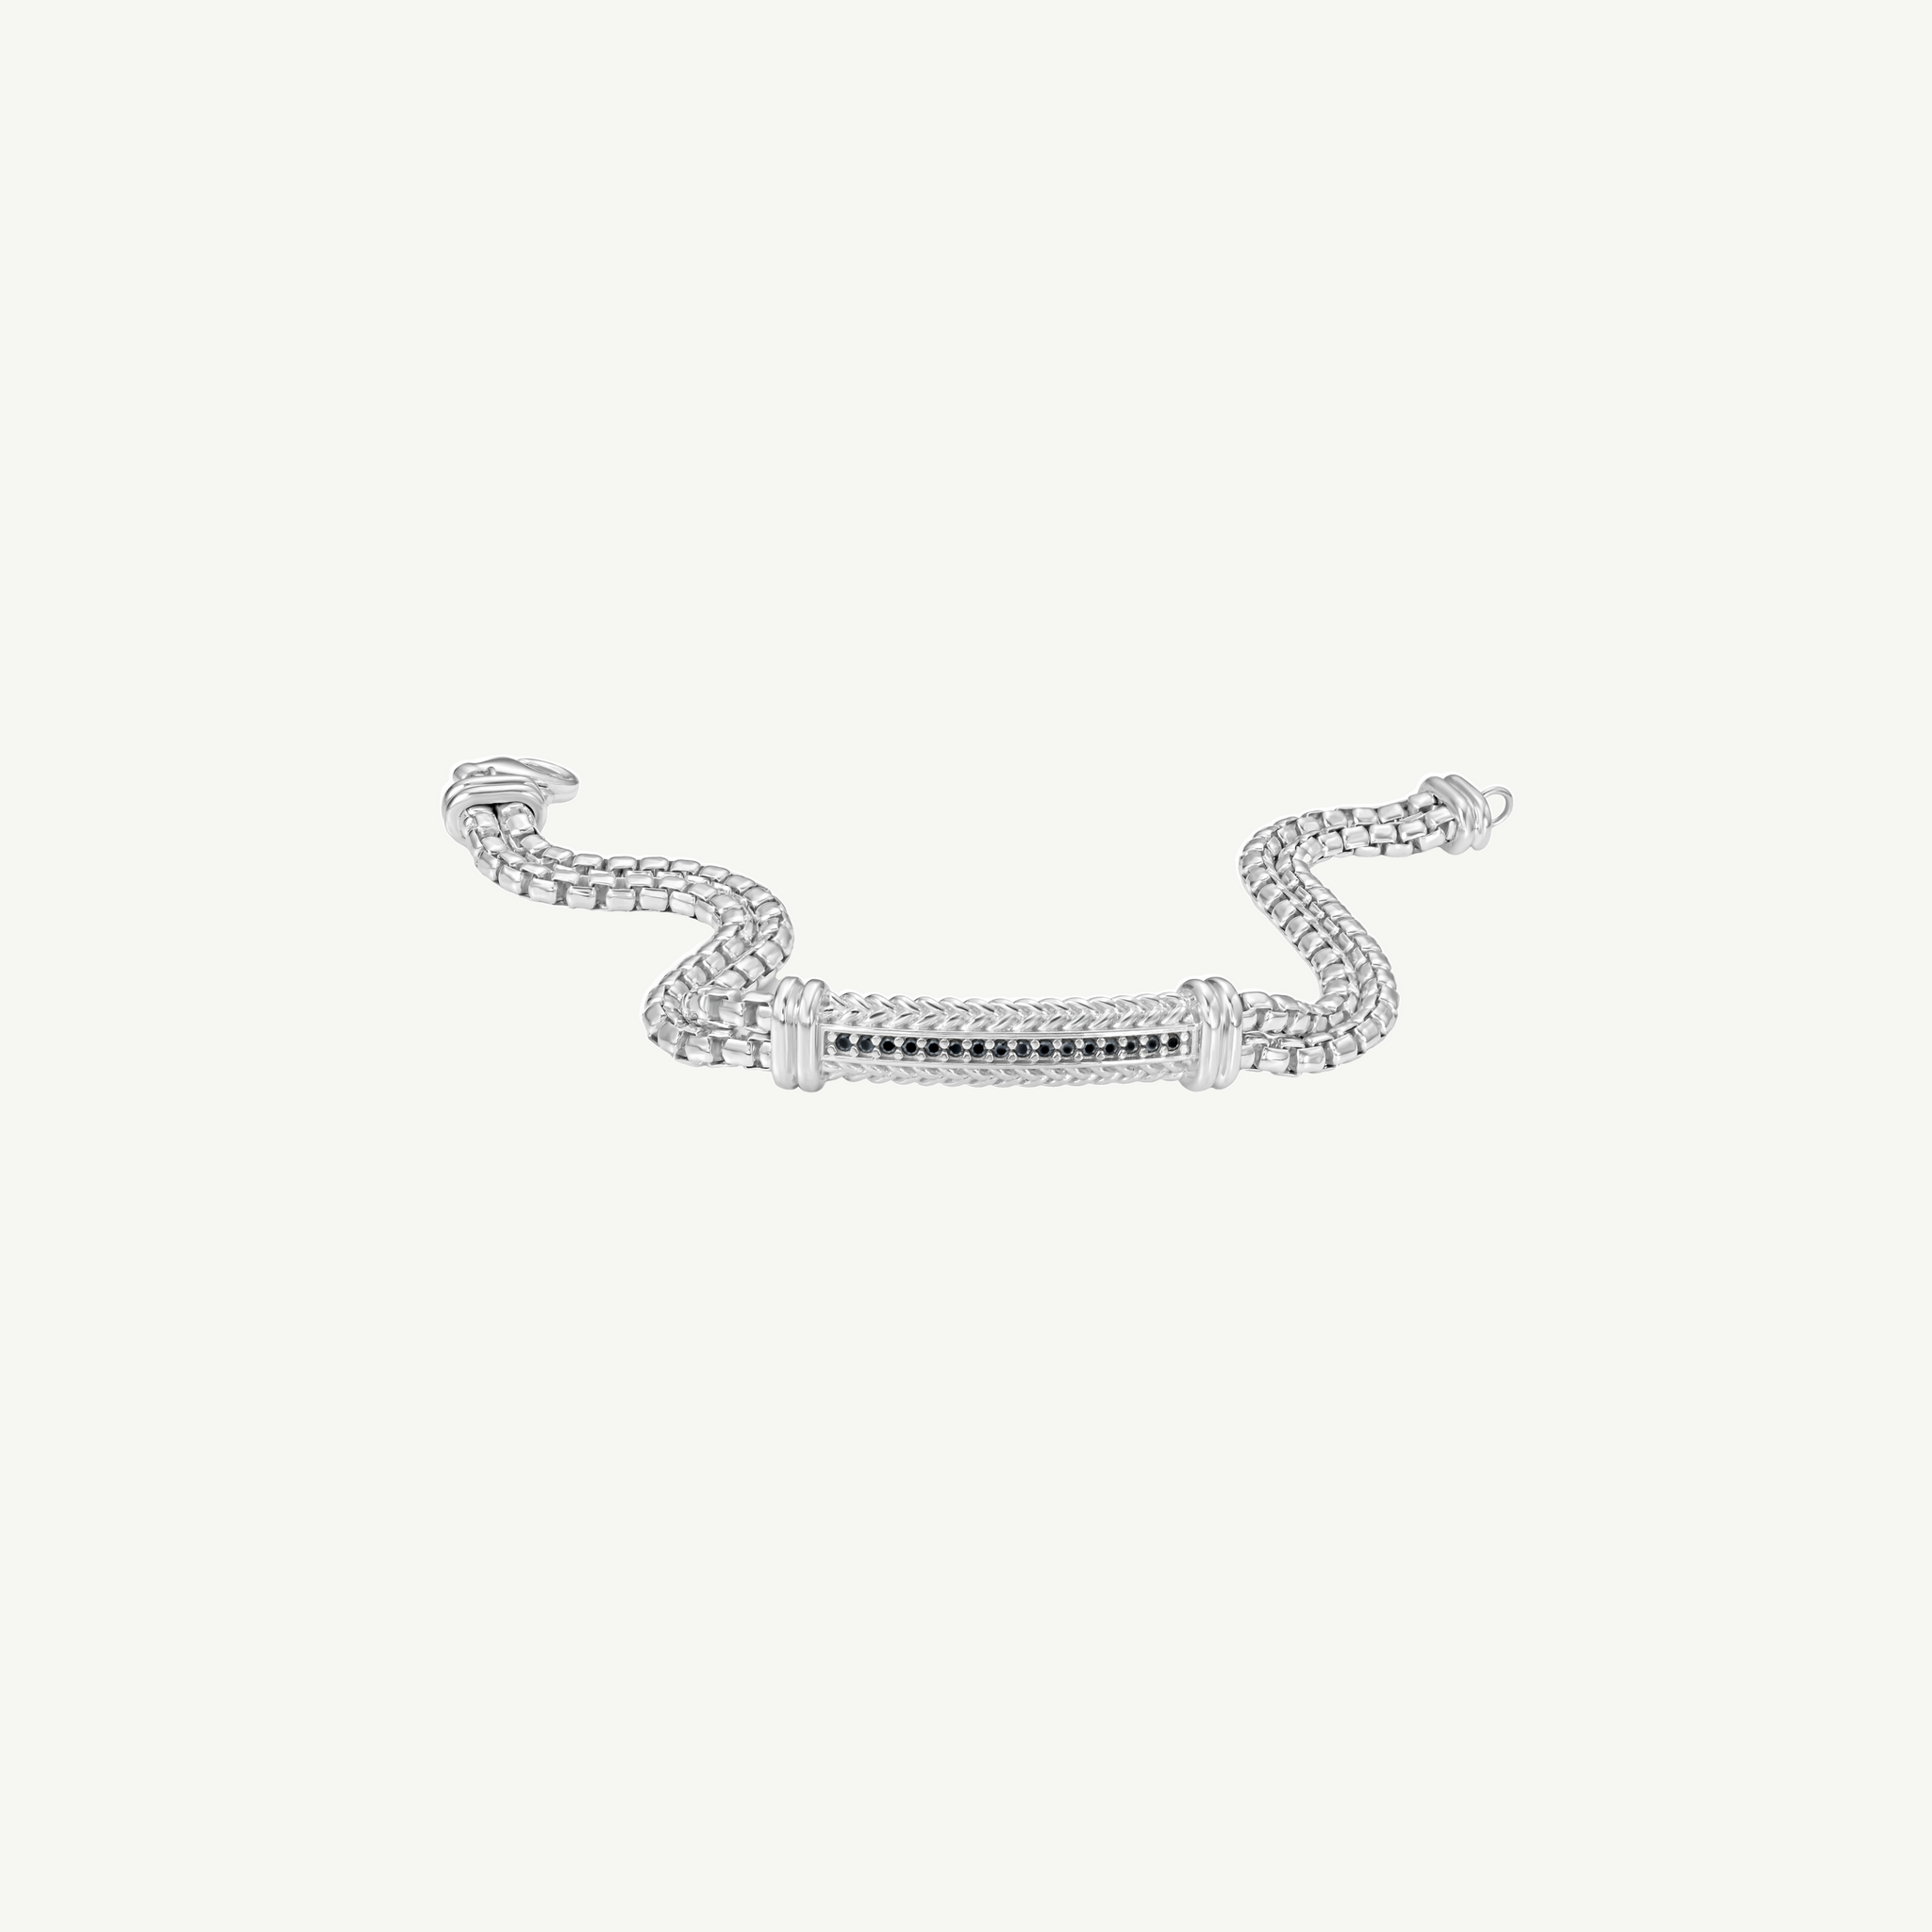 Silver Men's Box Link Woven Bracelet